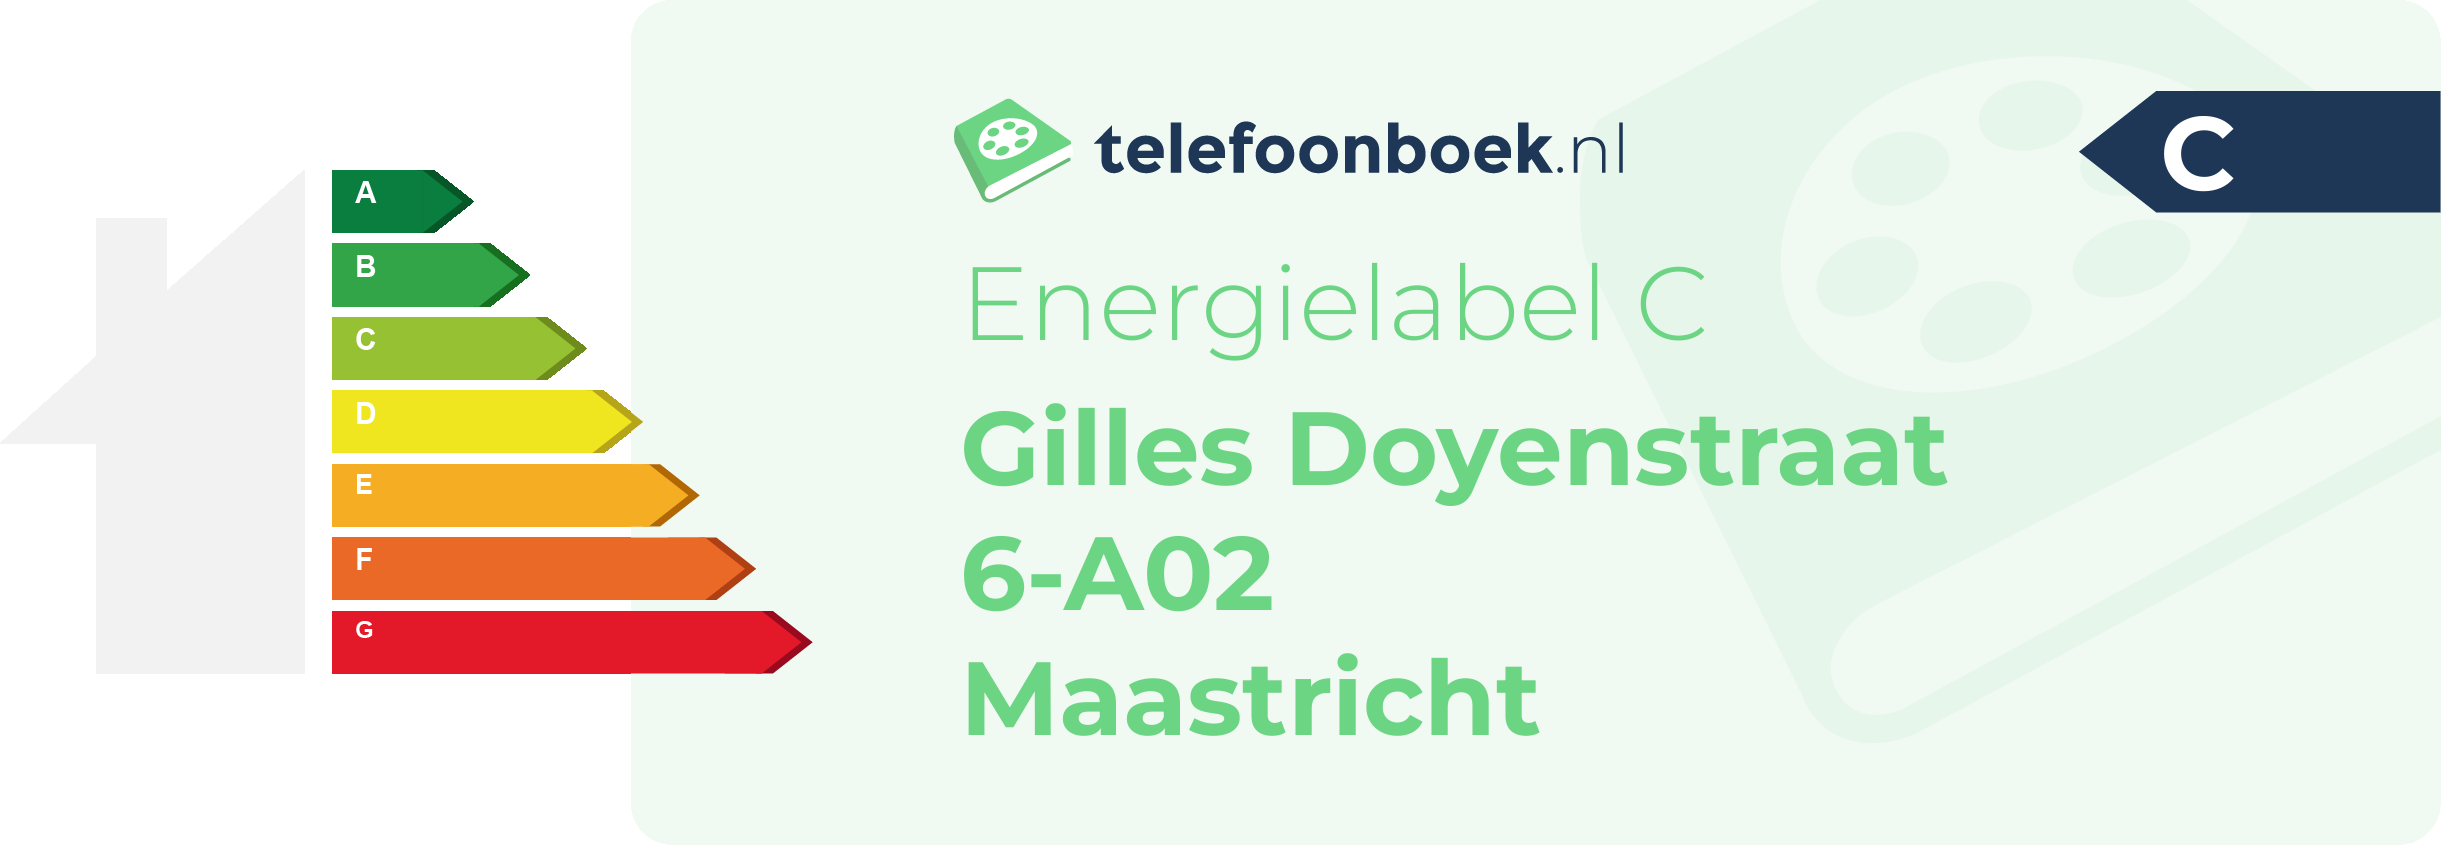 Energielabel Gilles Doyenstraat 6-A02 Maastricht